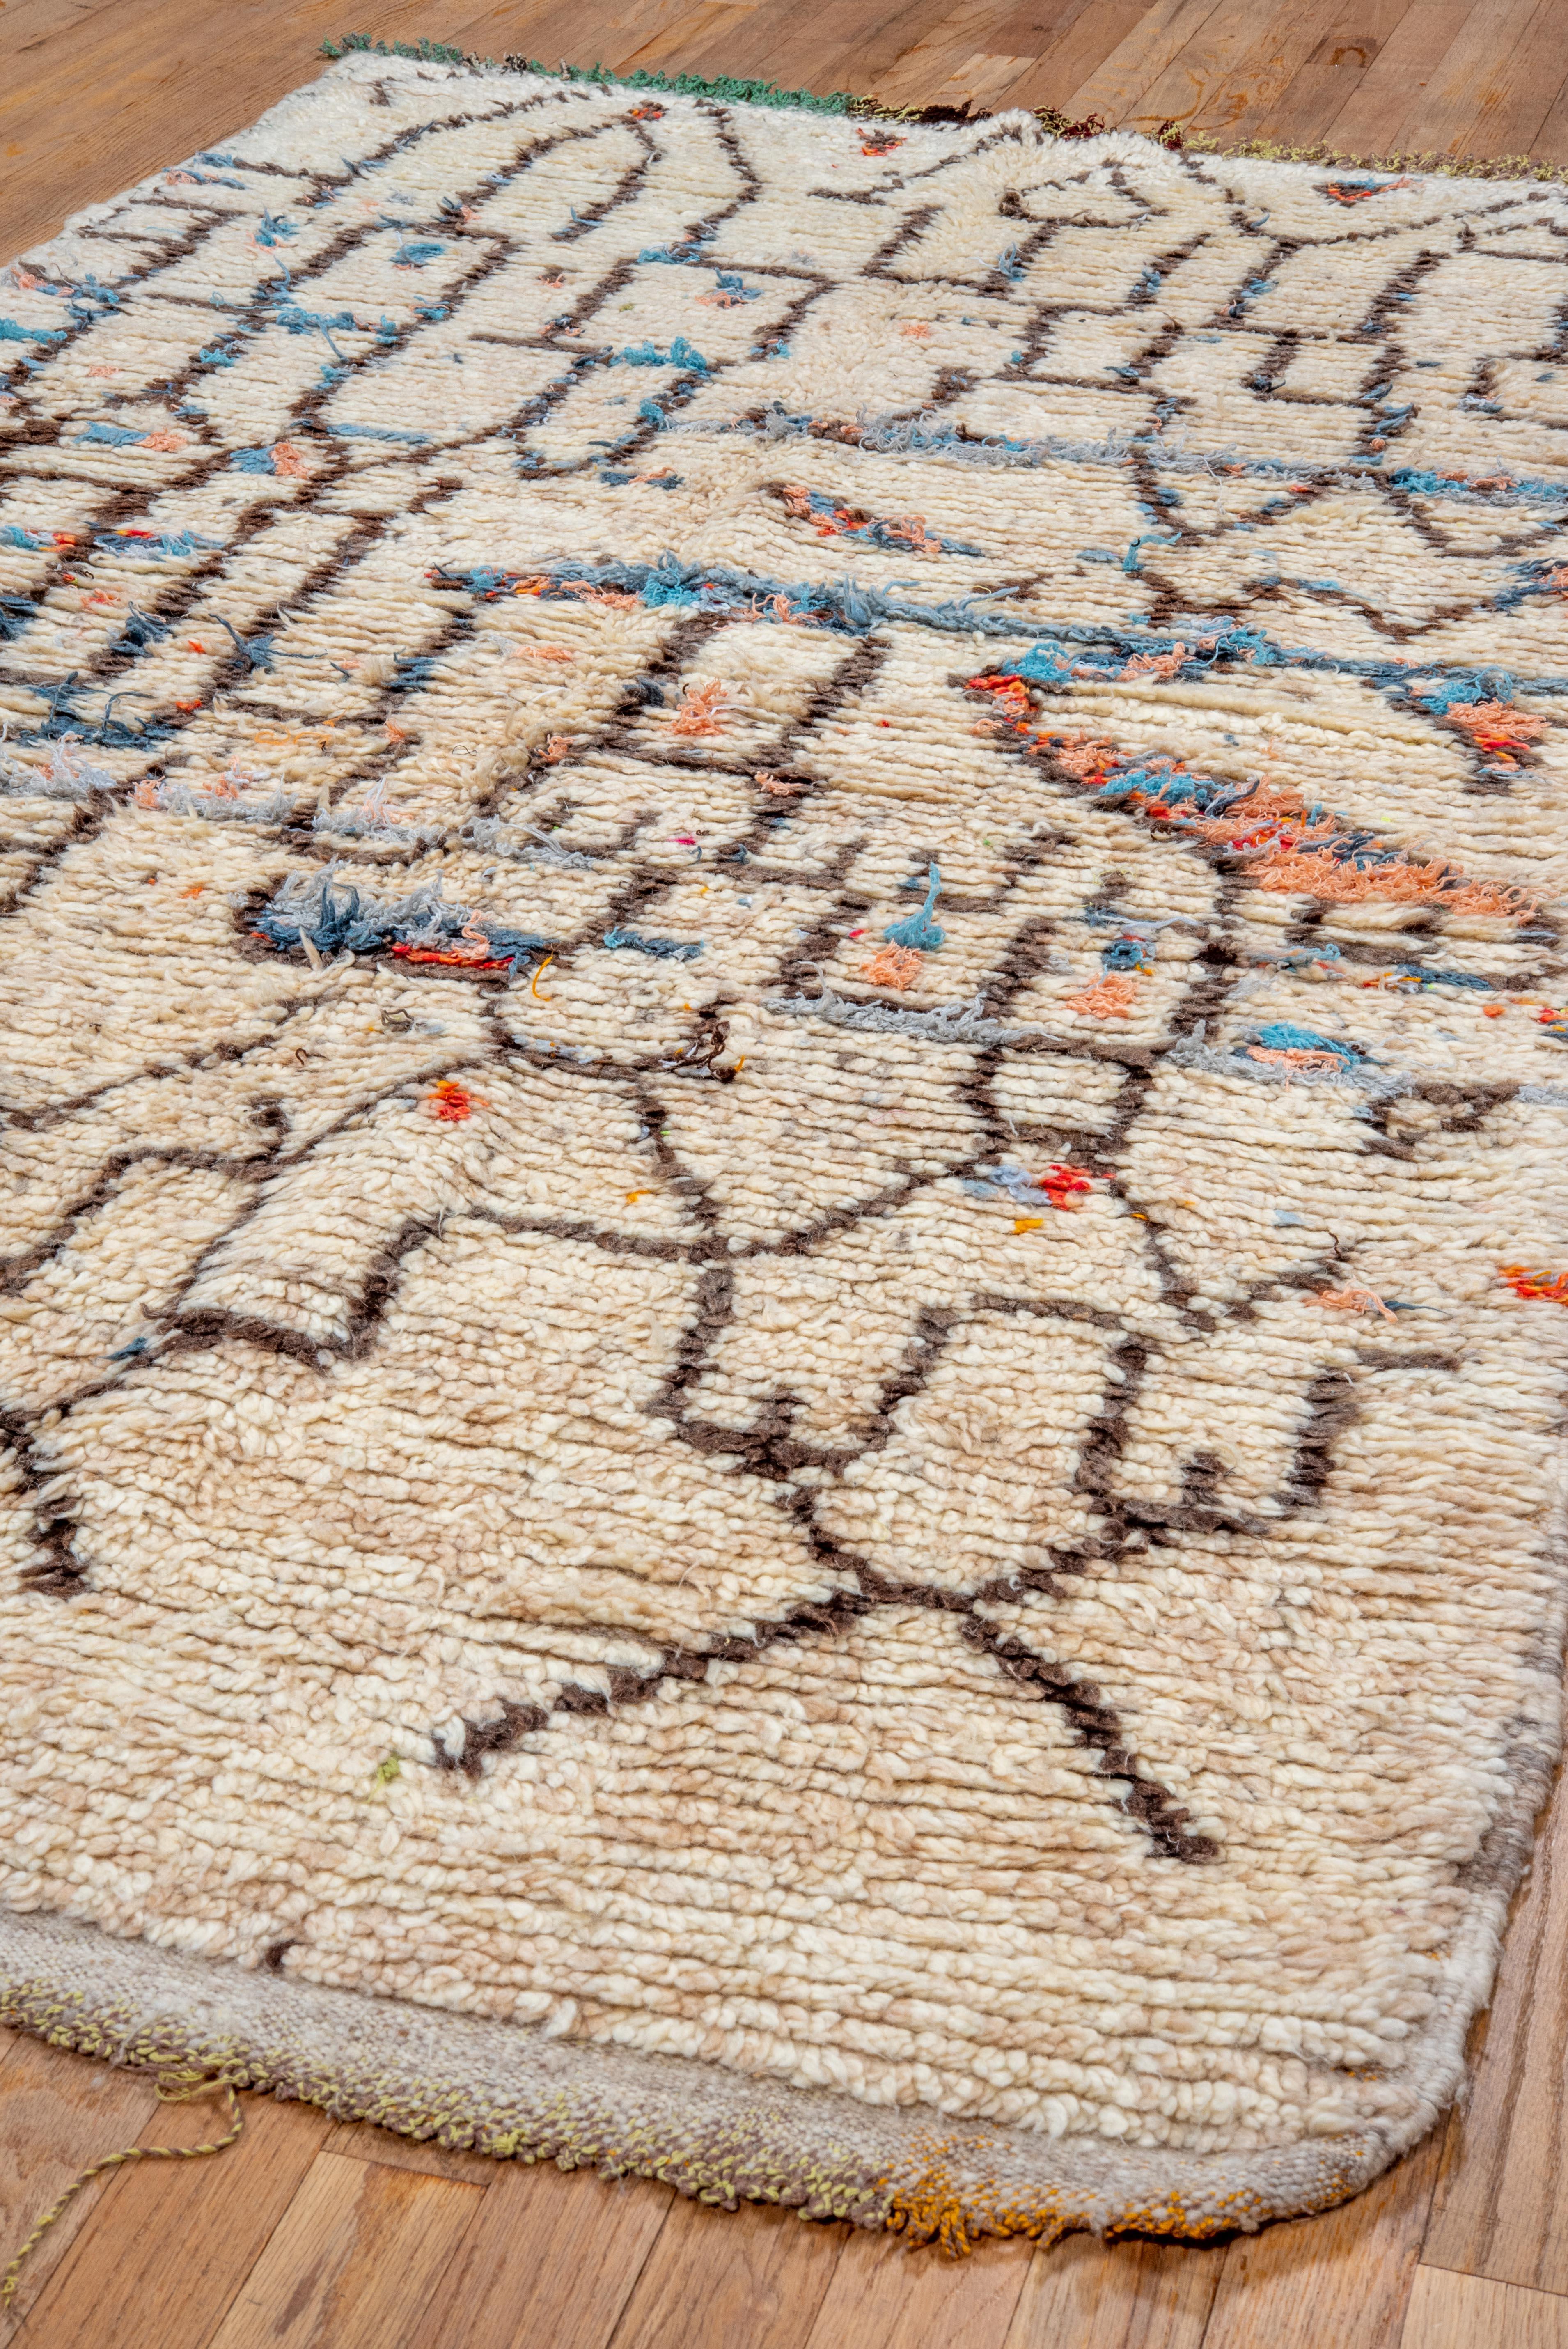 Mountain Village Moroccan Carpet in Whites Light Blues Blacks For Sale 1